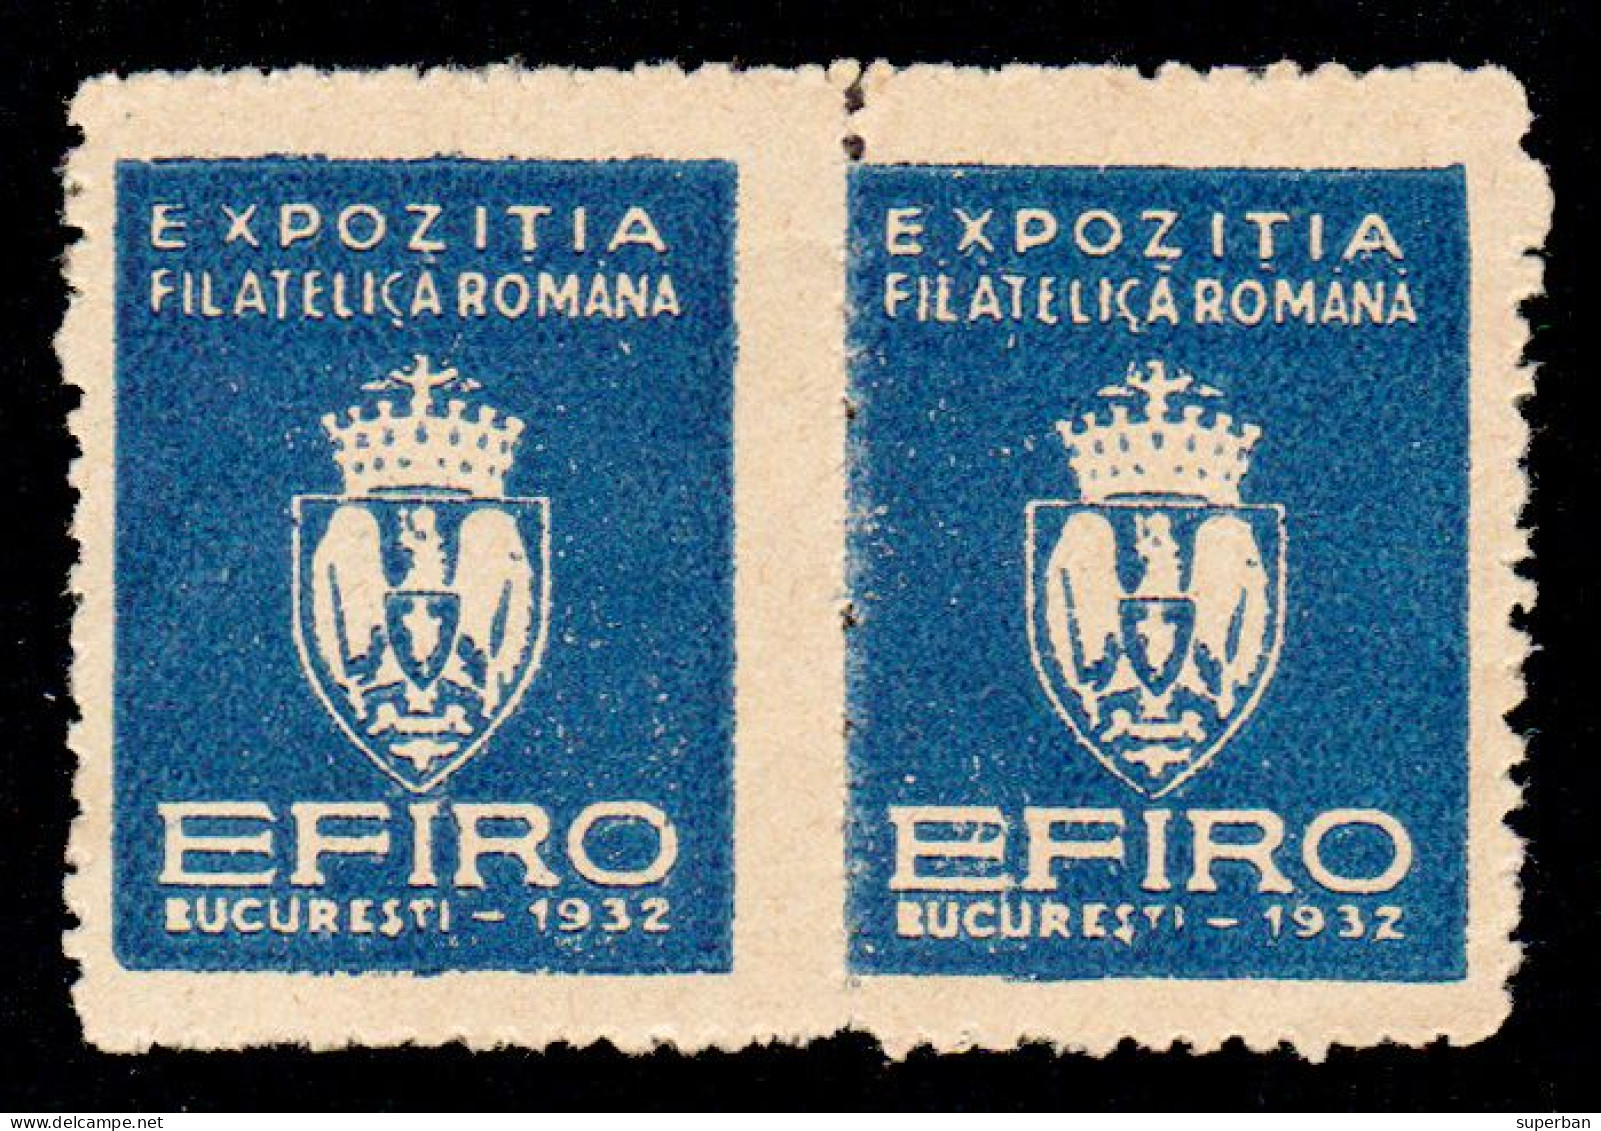 ROUMANIE / ROMANIA - VIGNETTE / CINDERELLA - 2 X EFIRO 1932 - EXPOZITIA FILATELICA ROMÂNA [ MNH ] - RRR ! (am819) - Fiscaux